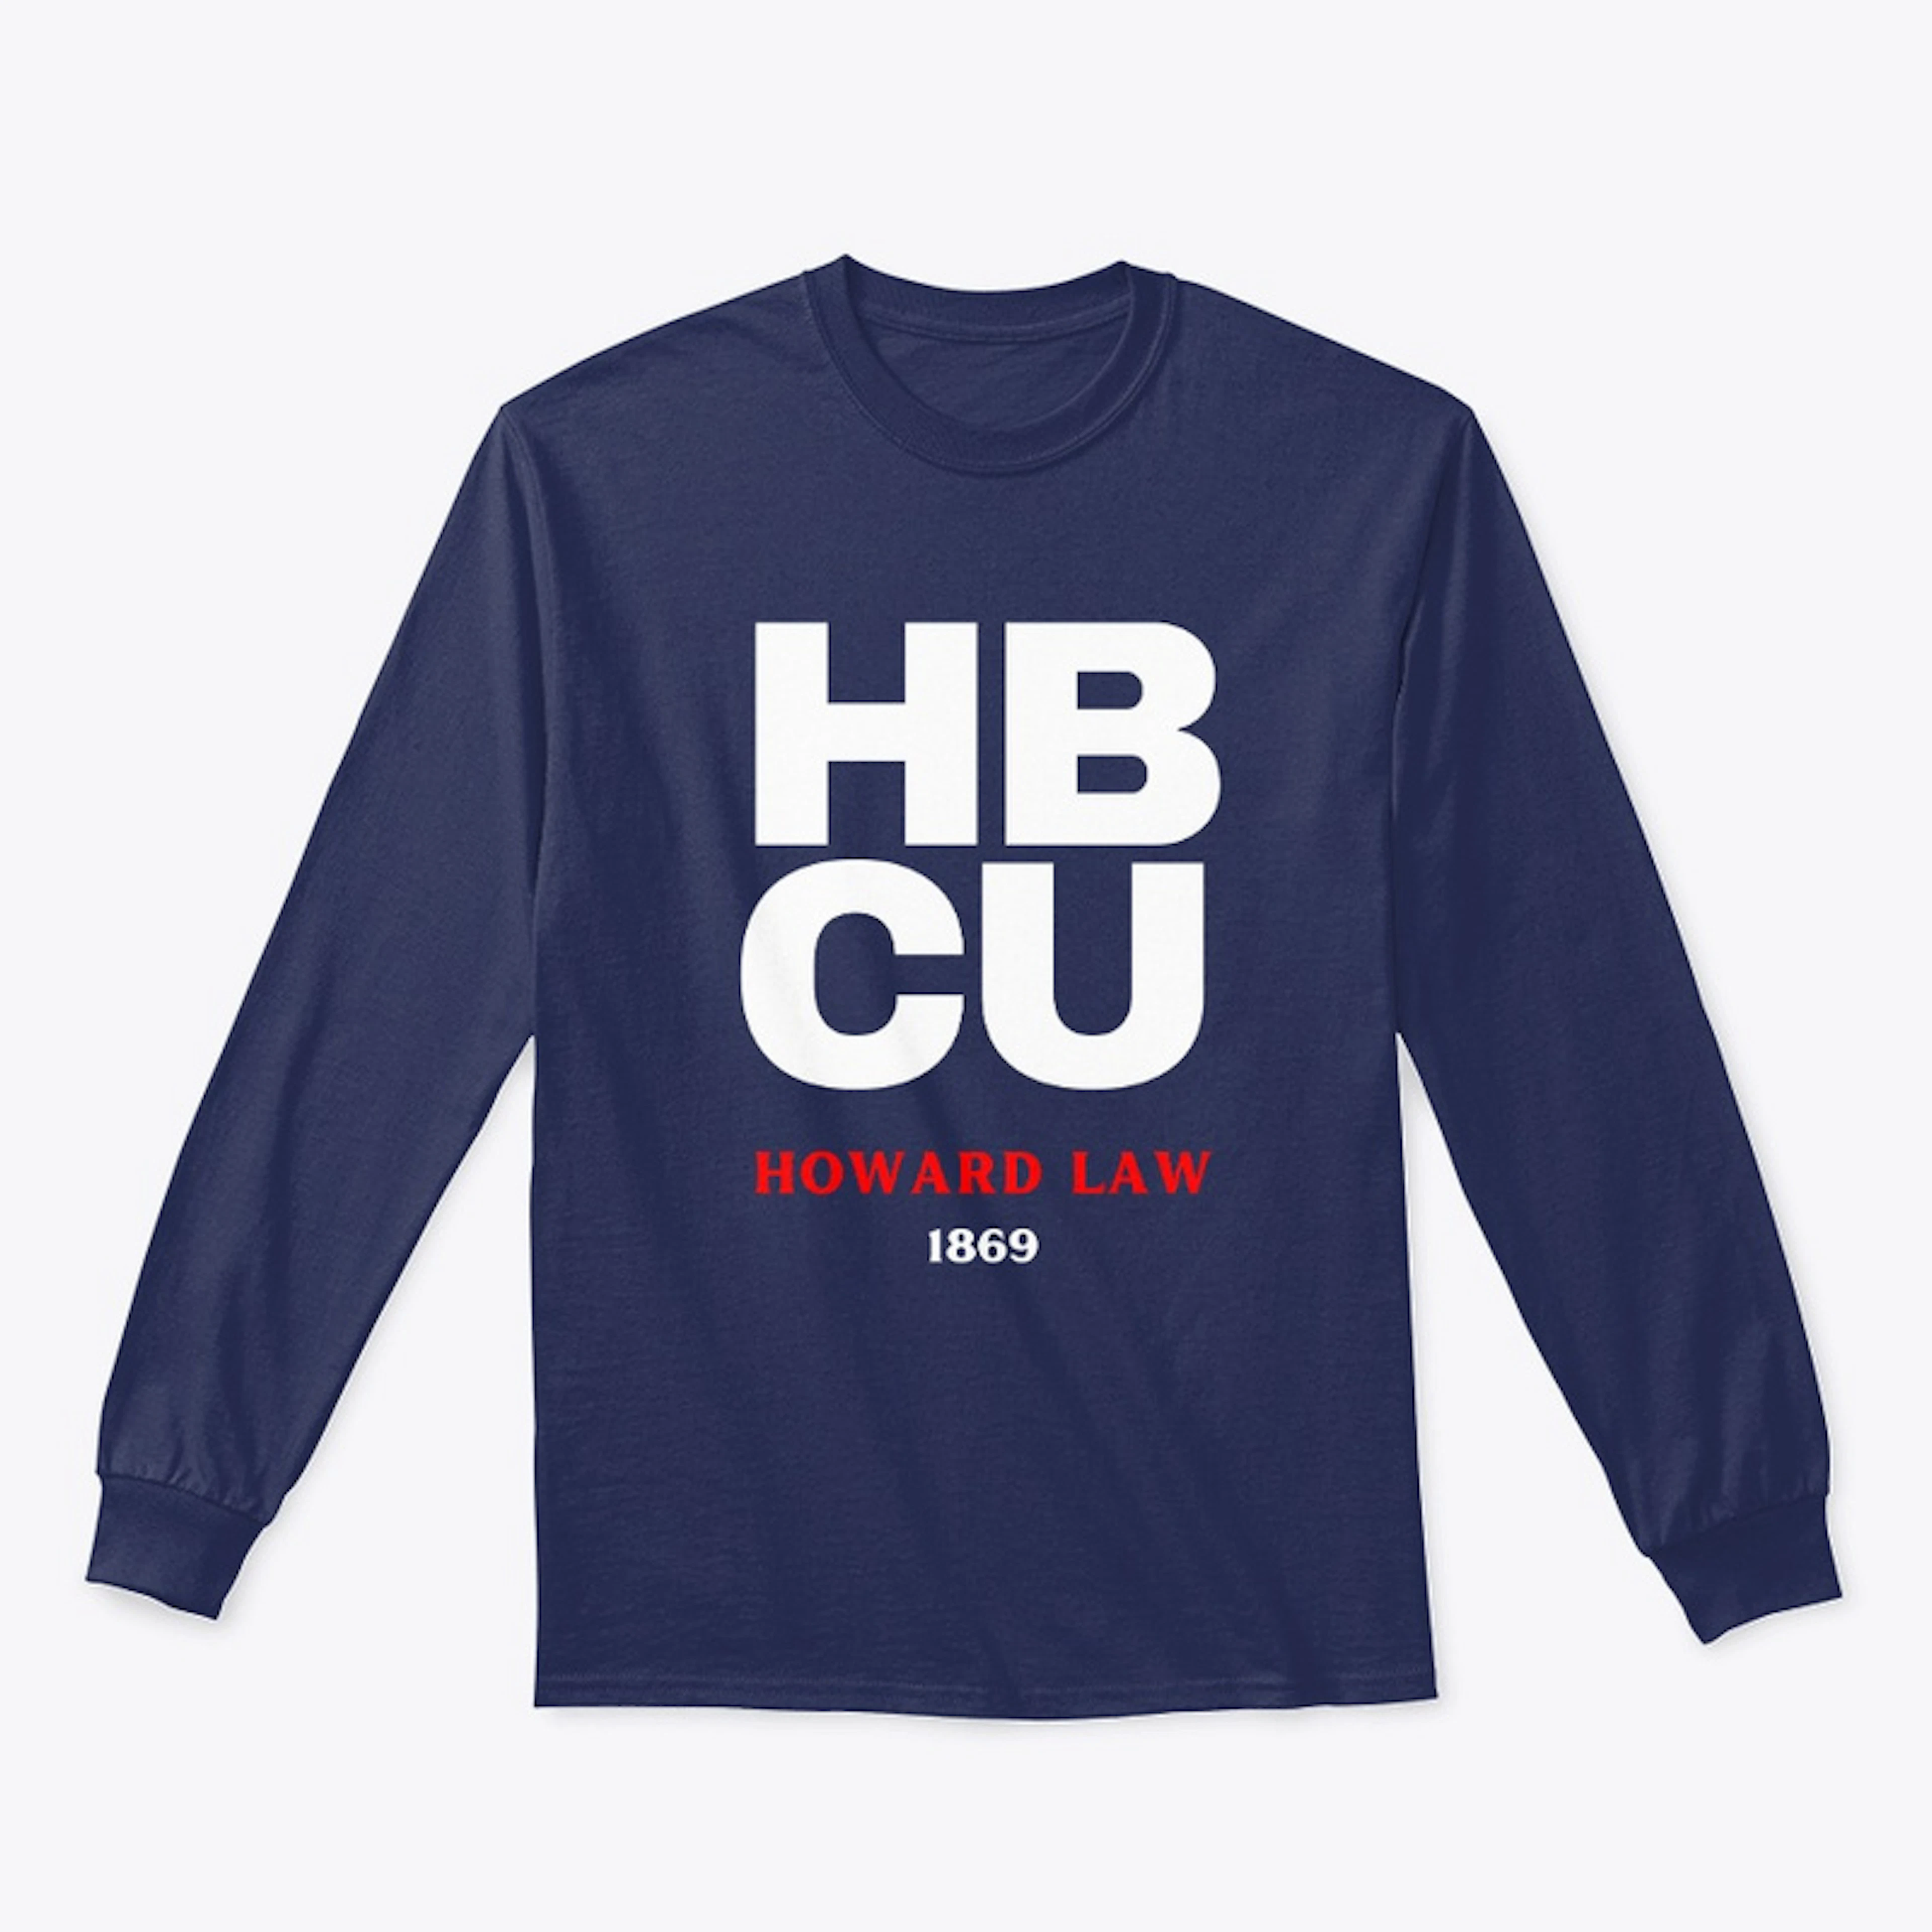 HBCU: Howard University School of Law